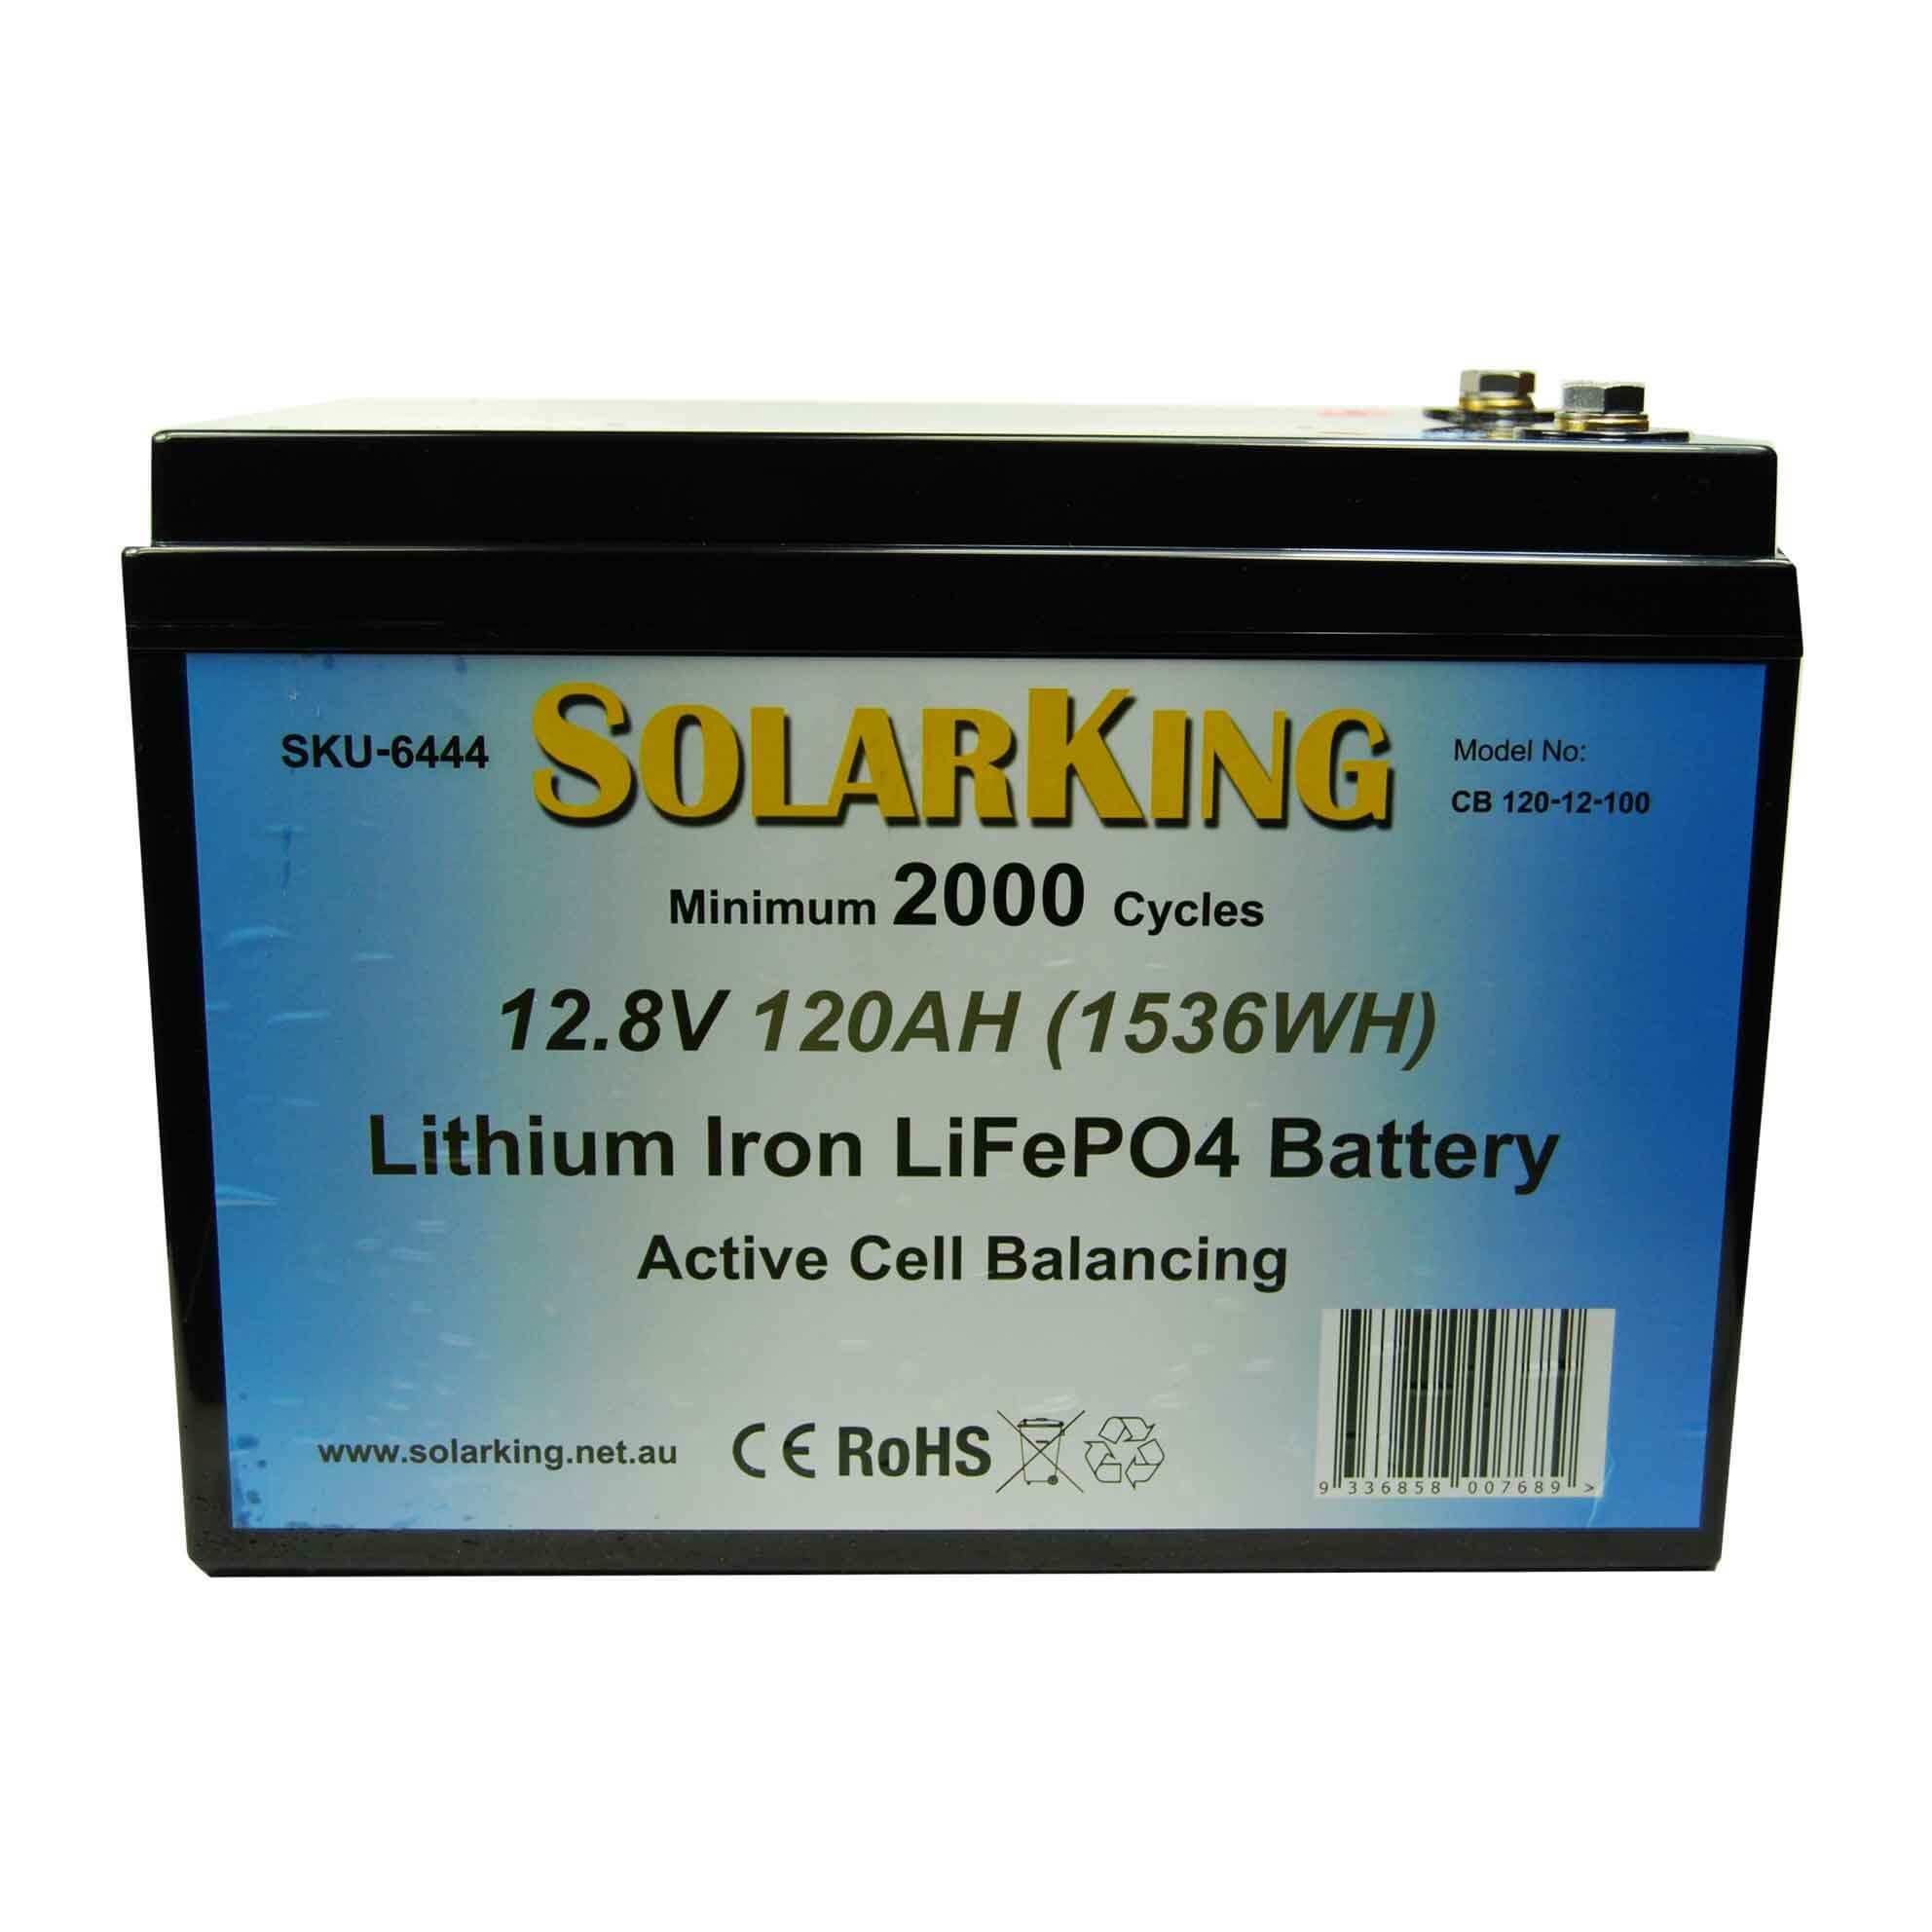 120AH Lithium LiFe PO4 SolarKing Battery - CB-120-12-100